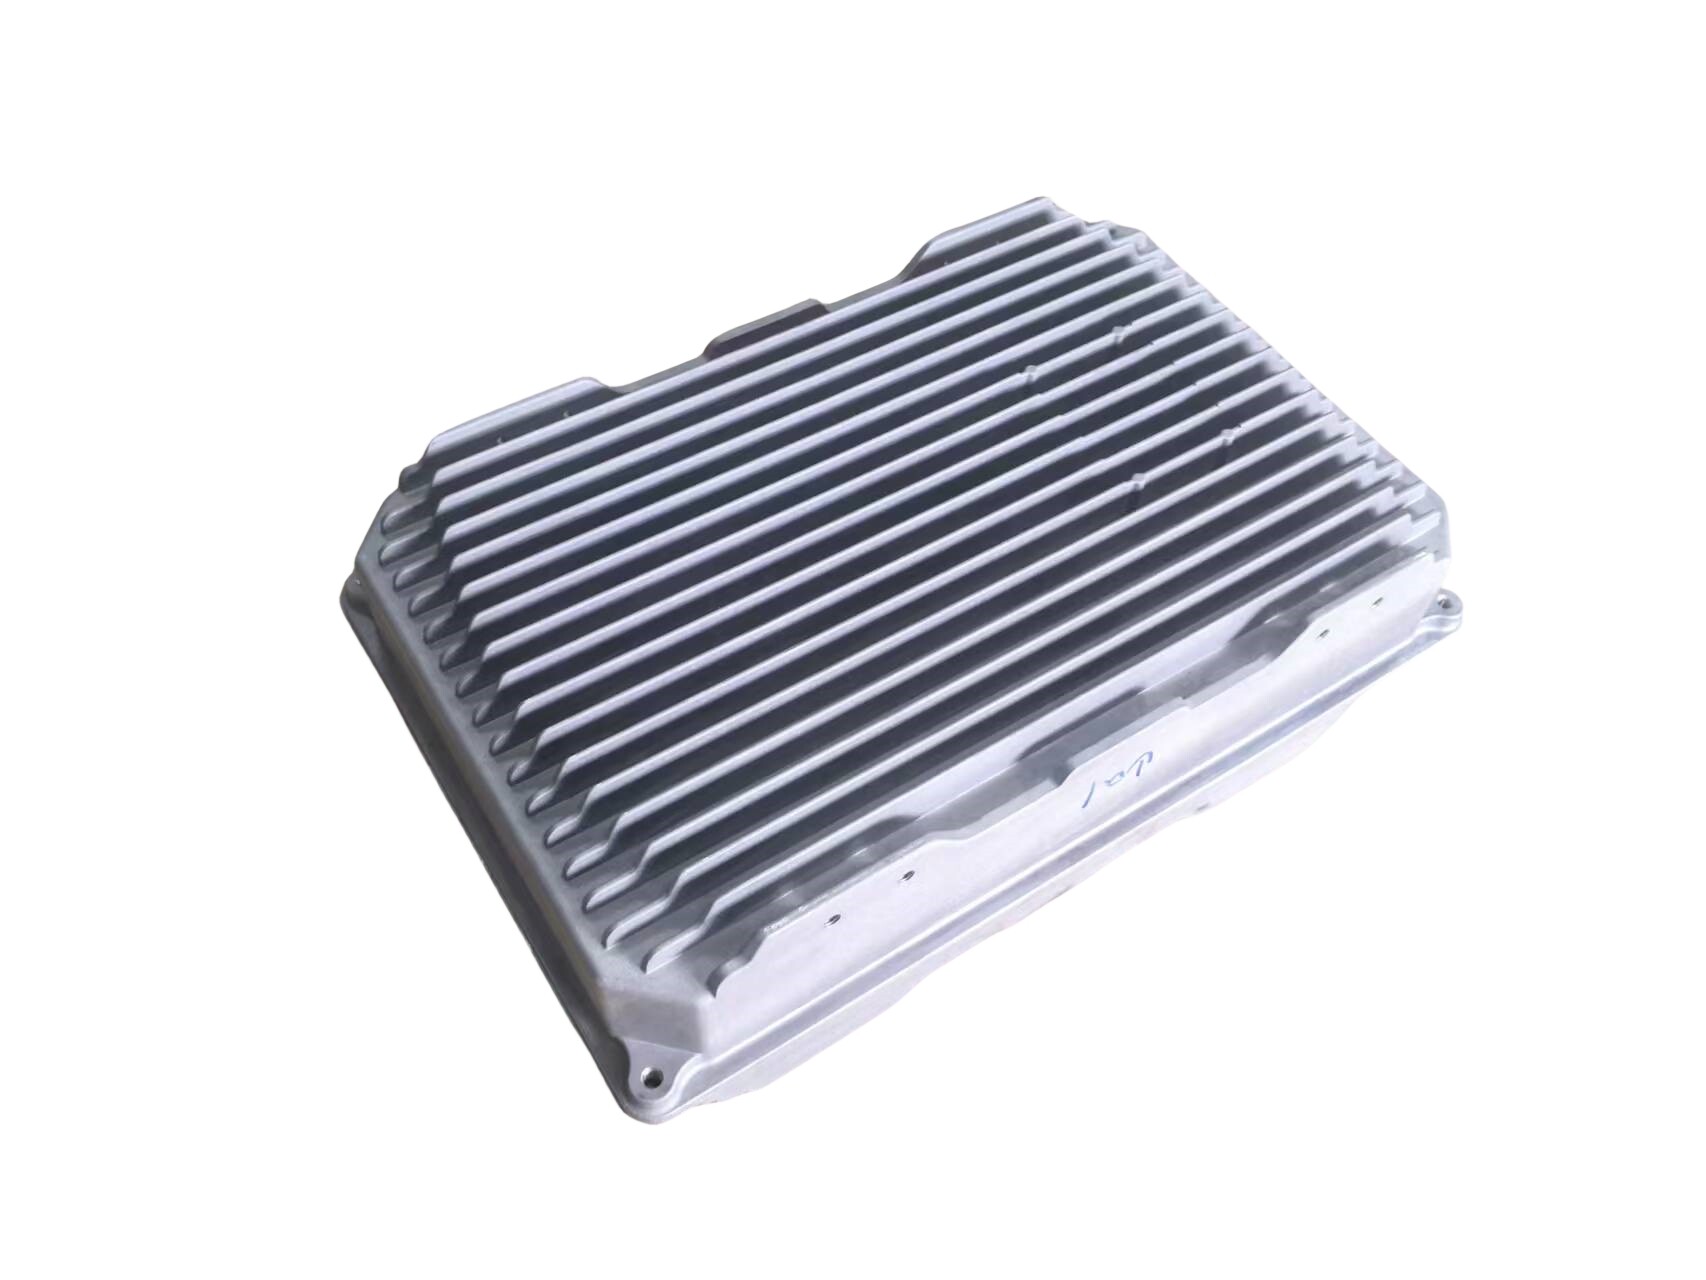 Aluminum Die-Cast 5G Communication Box